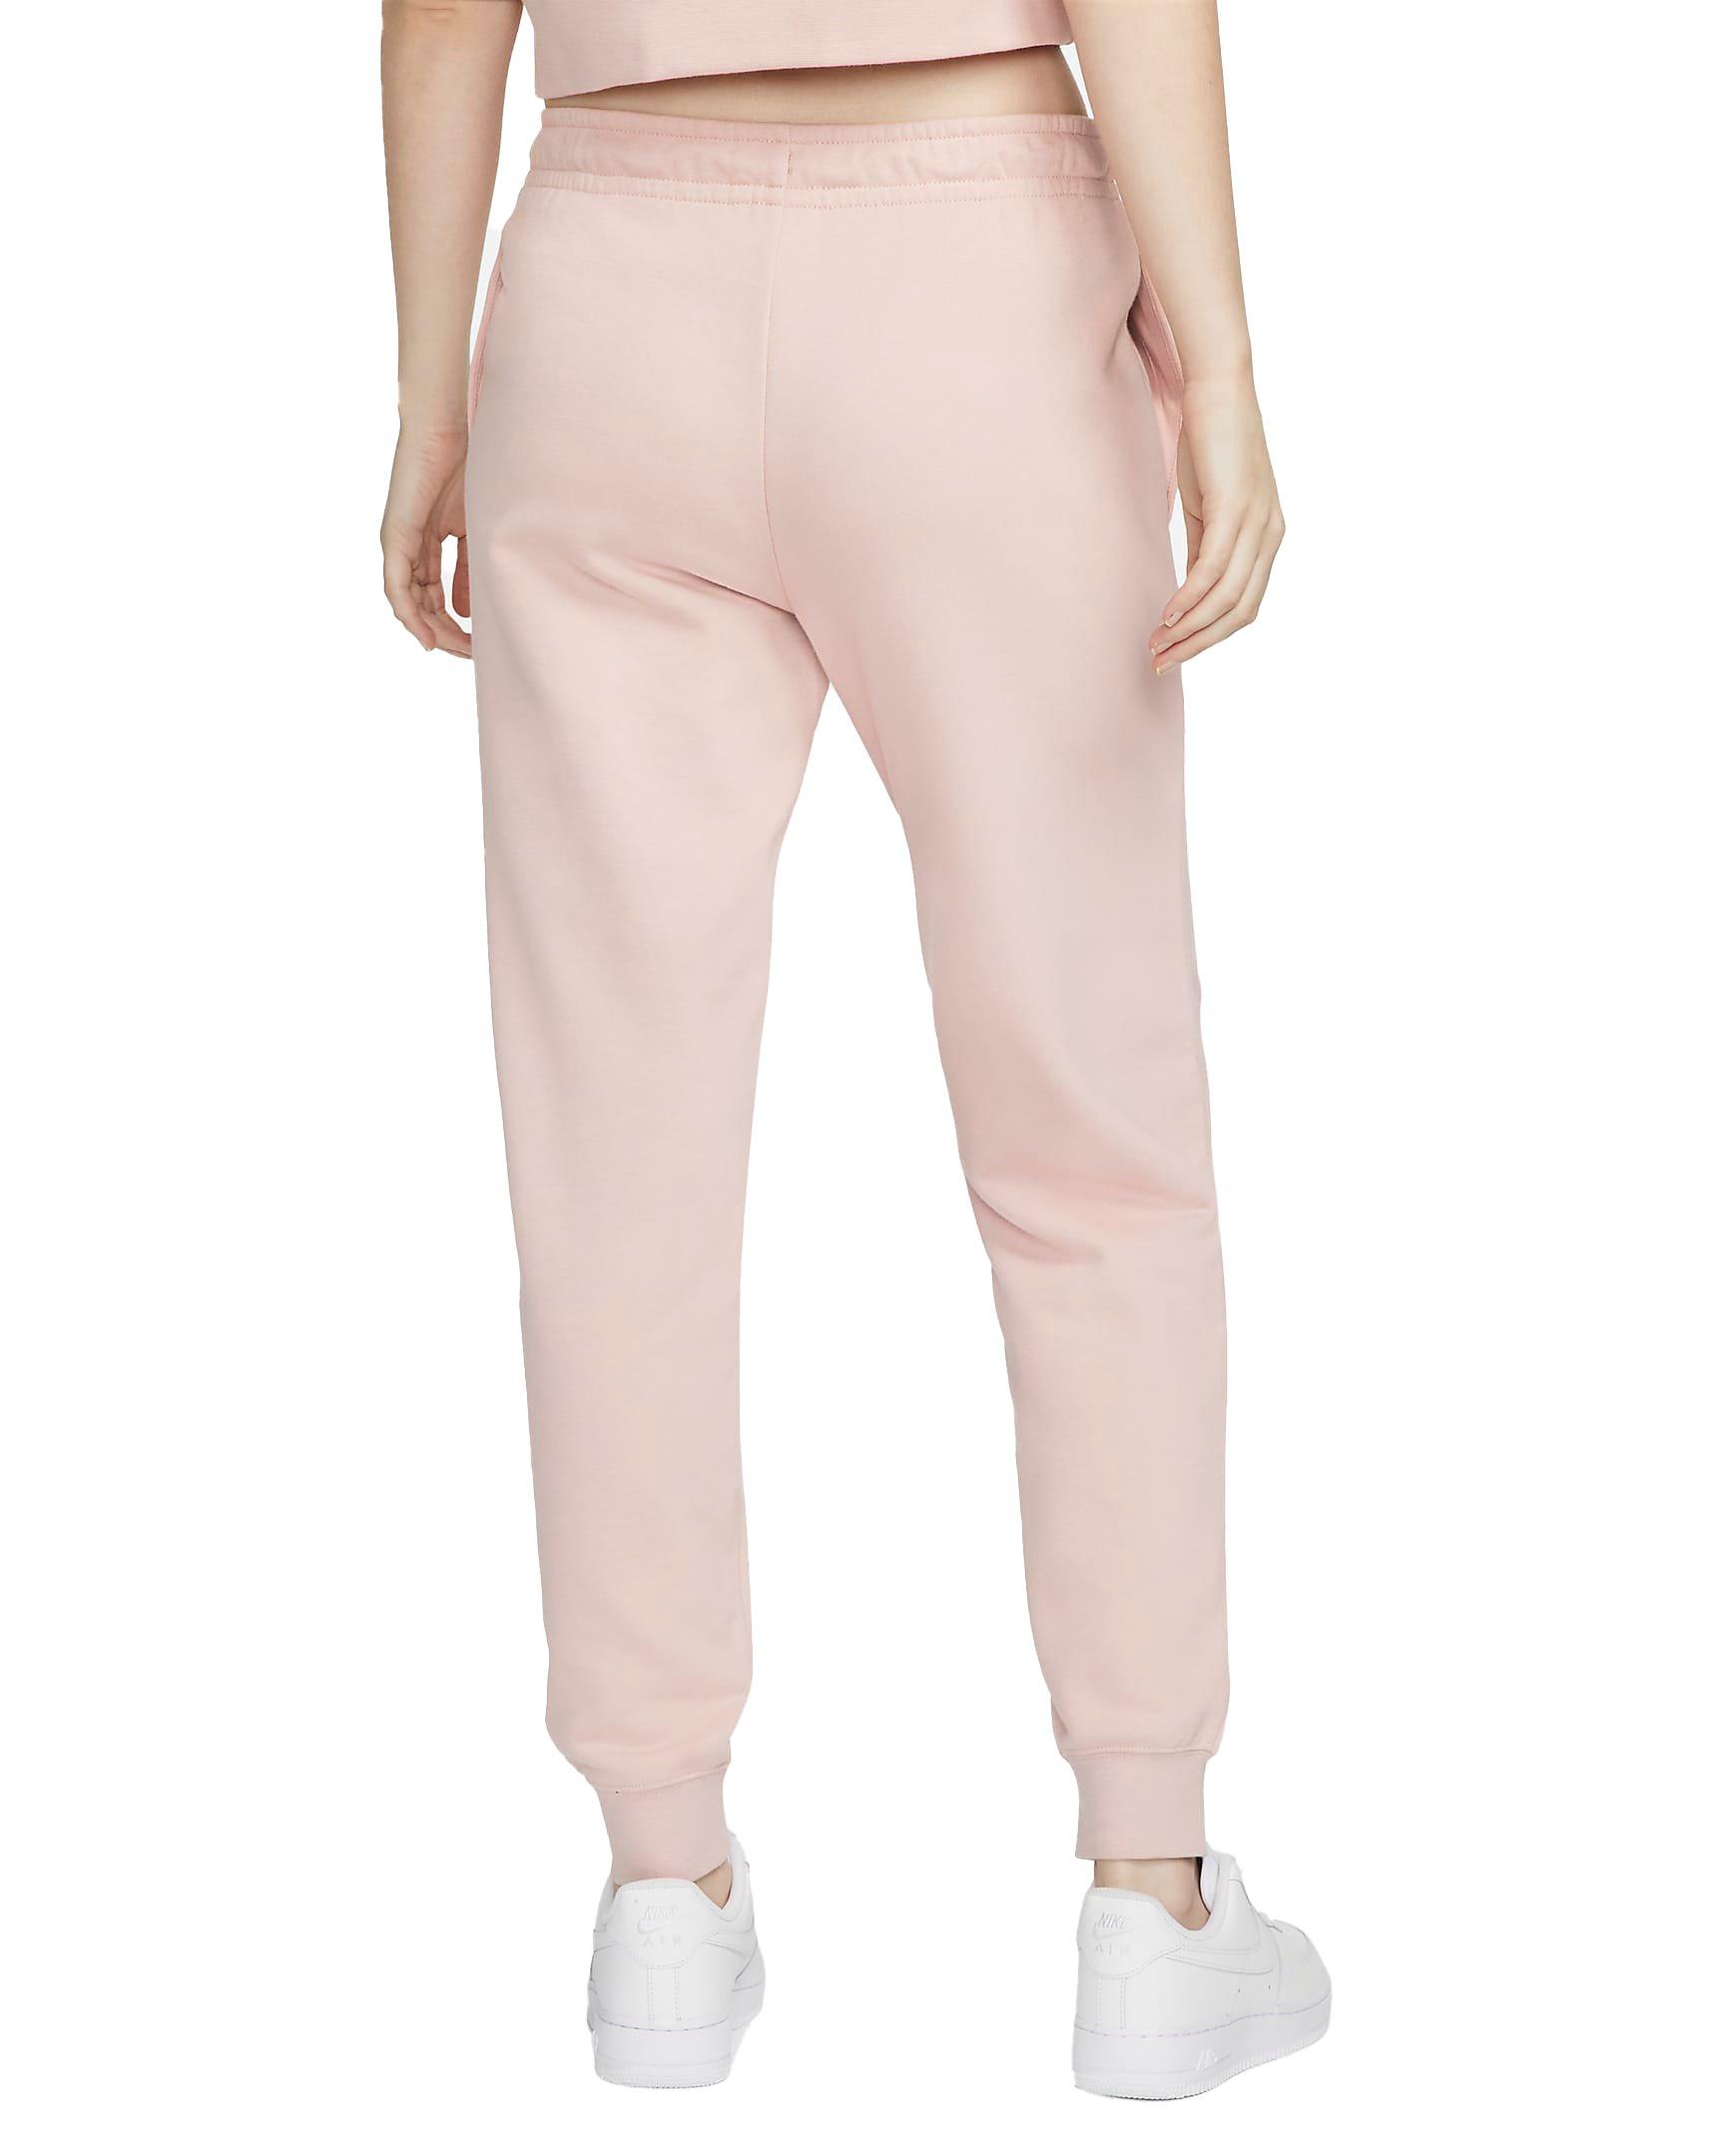 Jogger Pants Nike Sportswear Essential Collection -. Women's Fleece  Trousers Pink